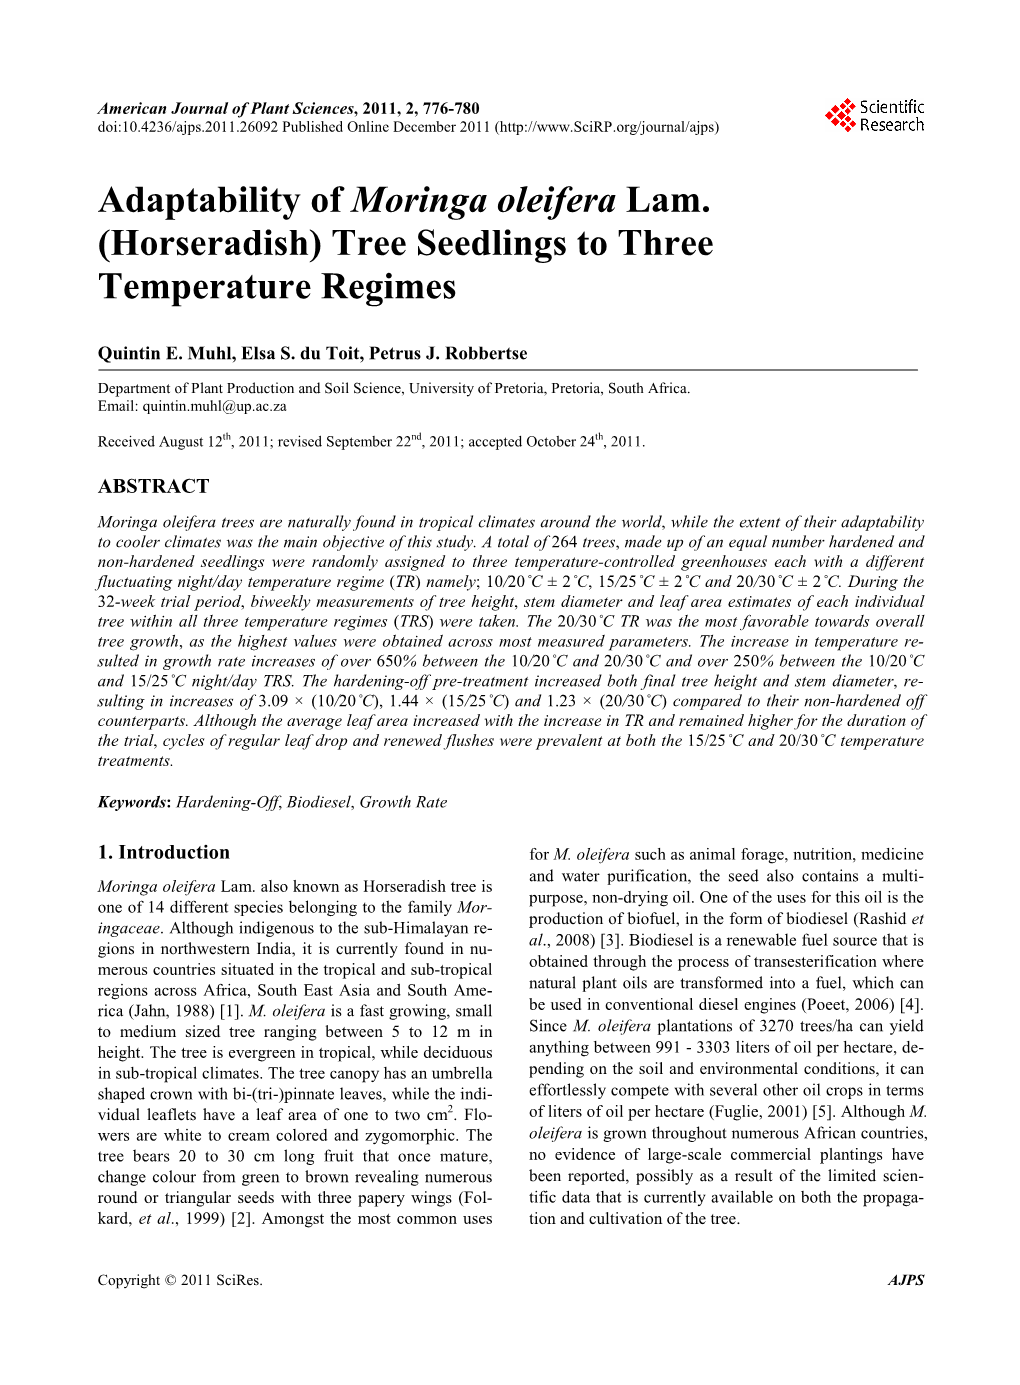 Adaptability of Moringa Oleifera Lam. (Horseradish) Tree Seedlings to Three Temperature Regimes